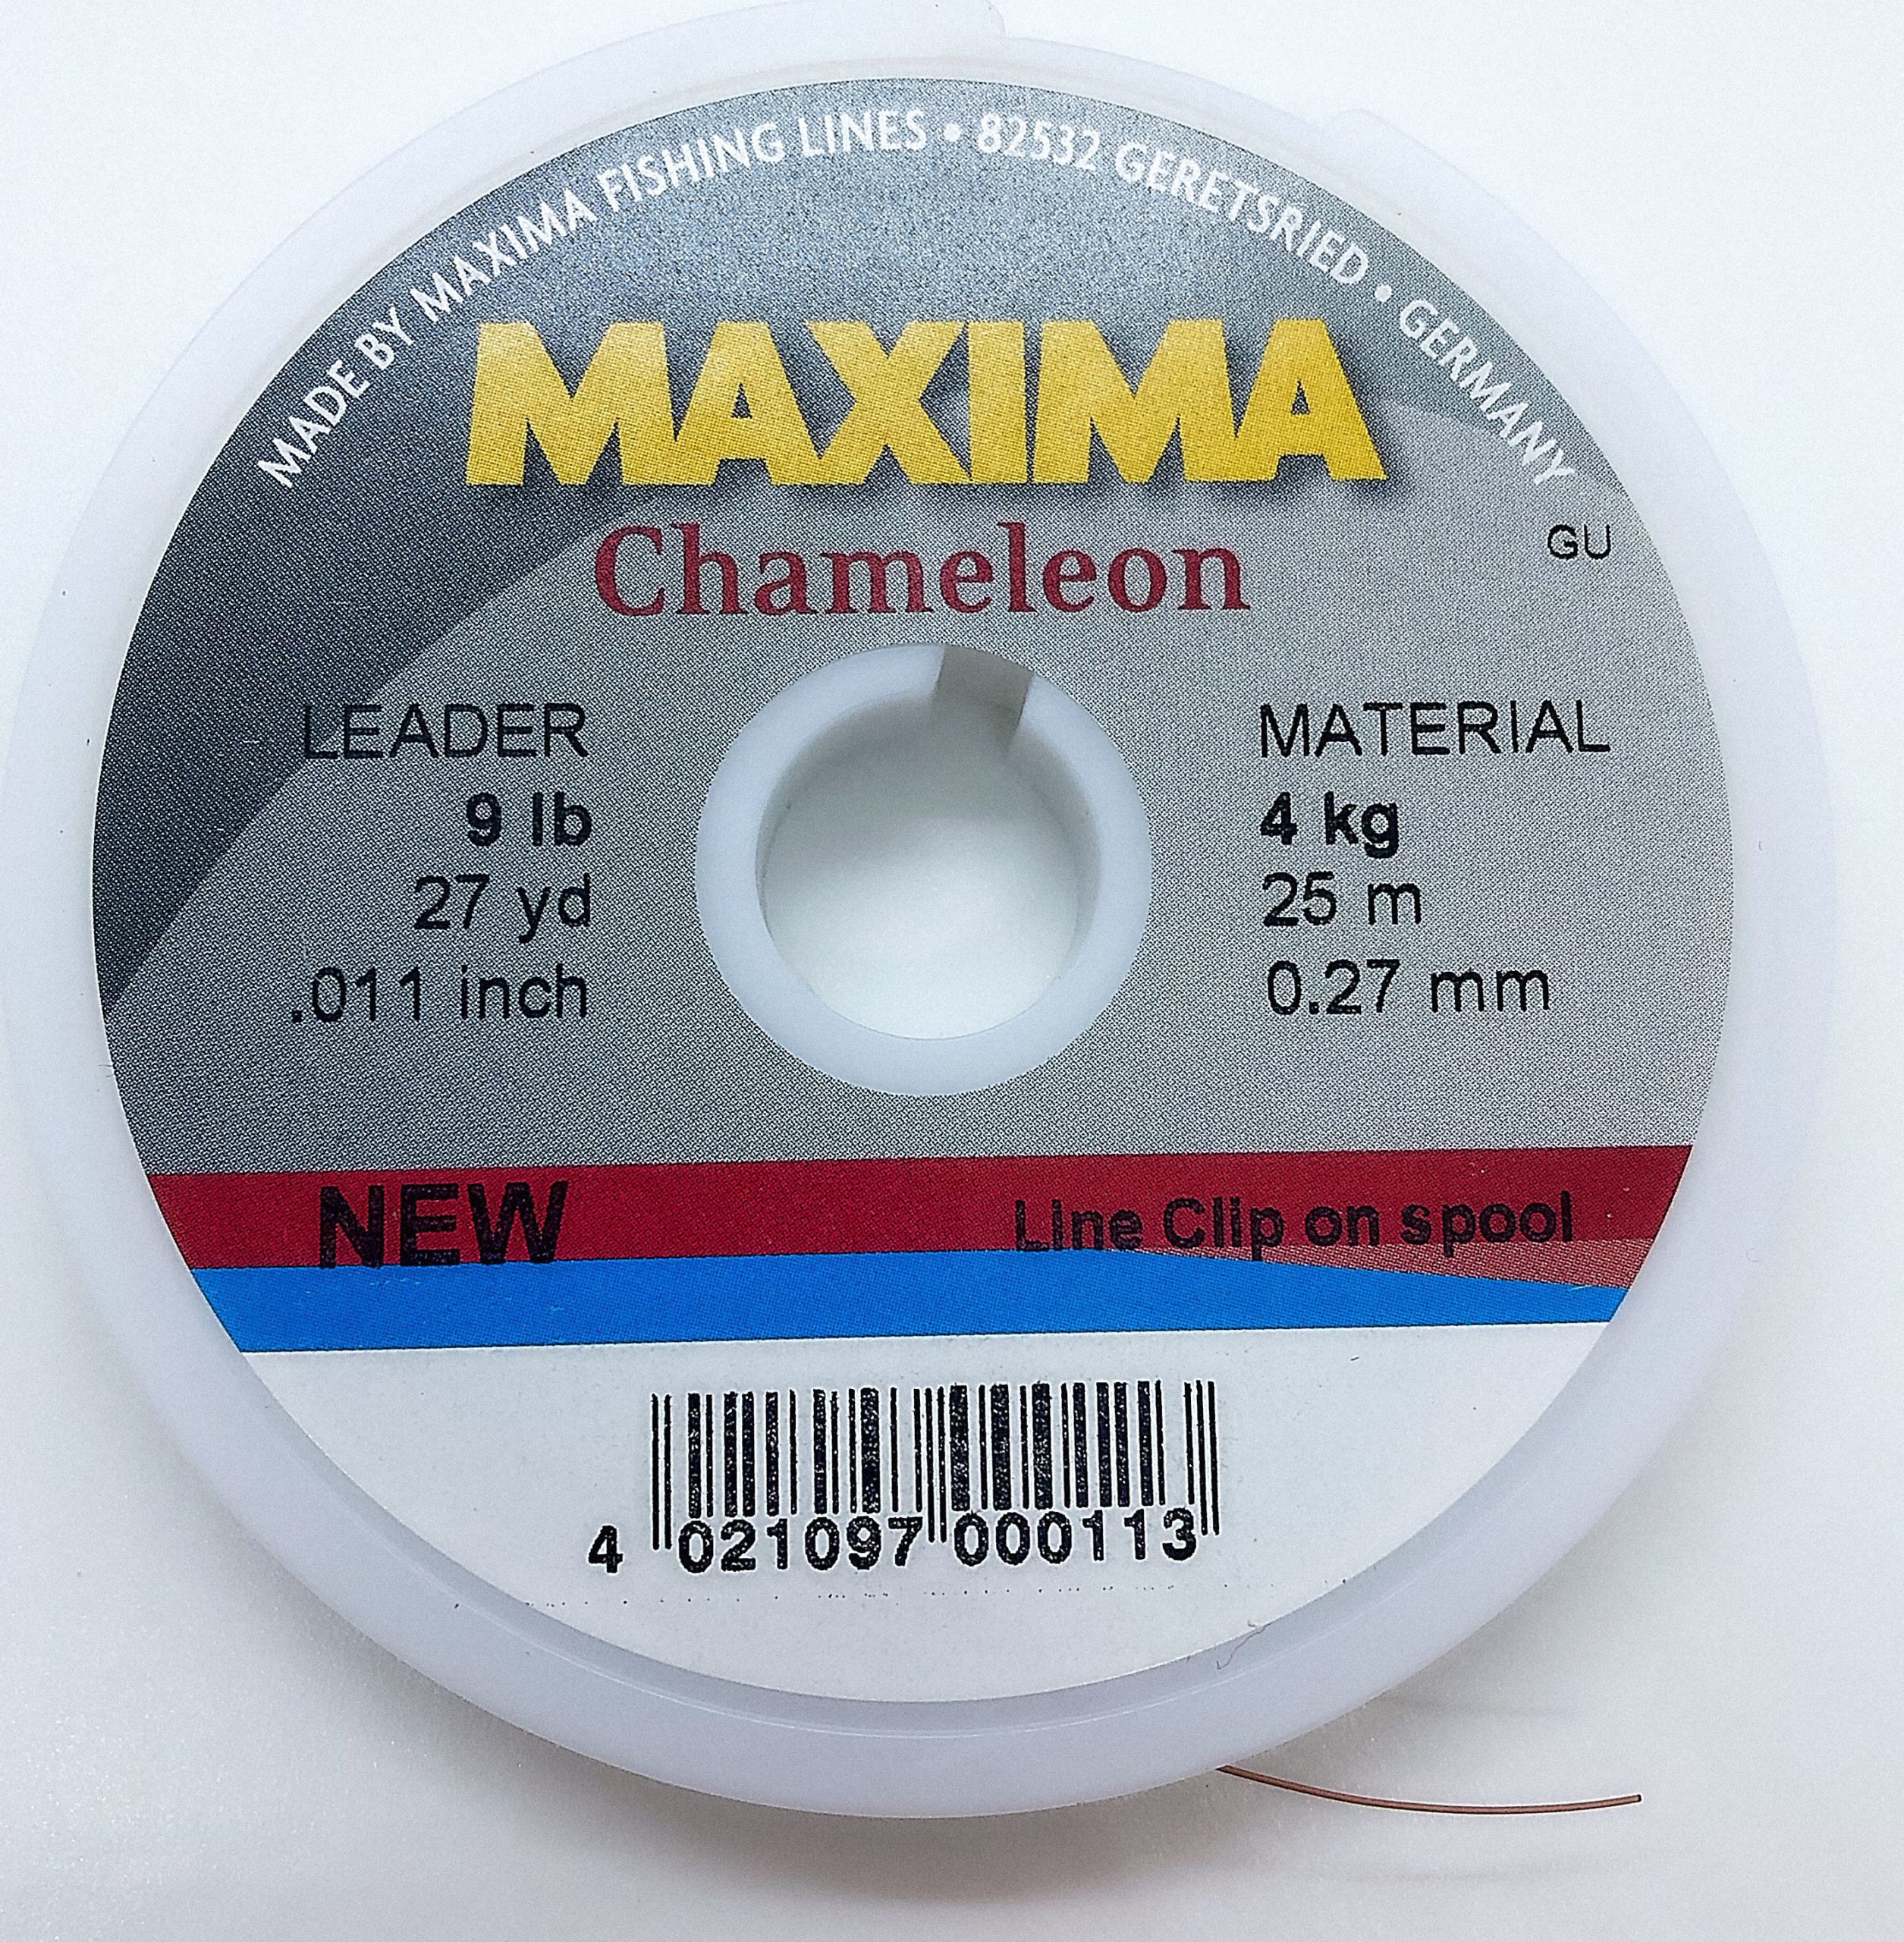 Maxima Chameleon tippet 0,27 mm. 9 lb